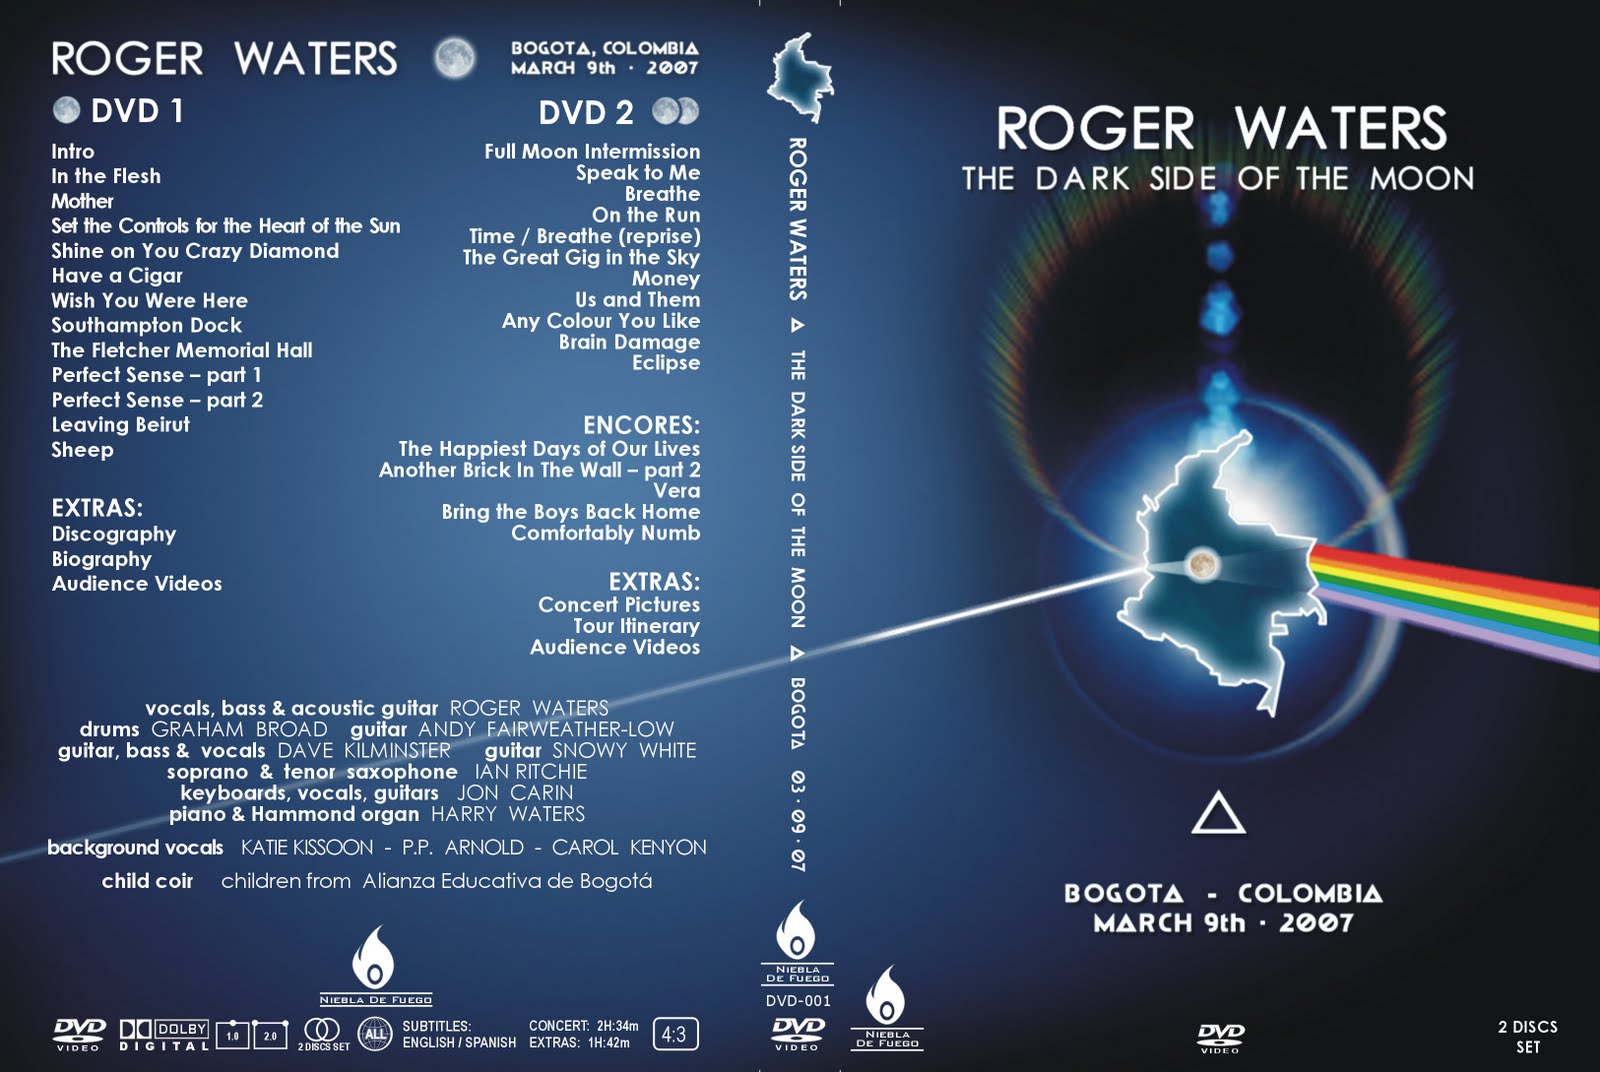 http://2.bp.blogspot.com/-s_jrqua8lG8/Tddqx2bqS2I/AAAAAAAACyQ/qsQM4JYukNU/s1600/001+-+DVD+Cover++For+ShowRoger+Waters+Live+At+Bgota+2007.jpg